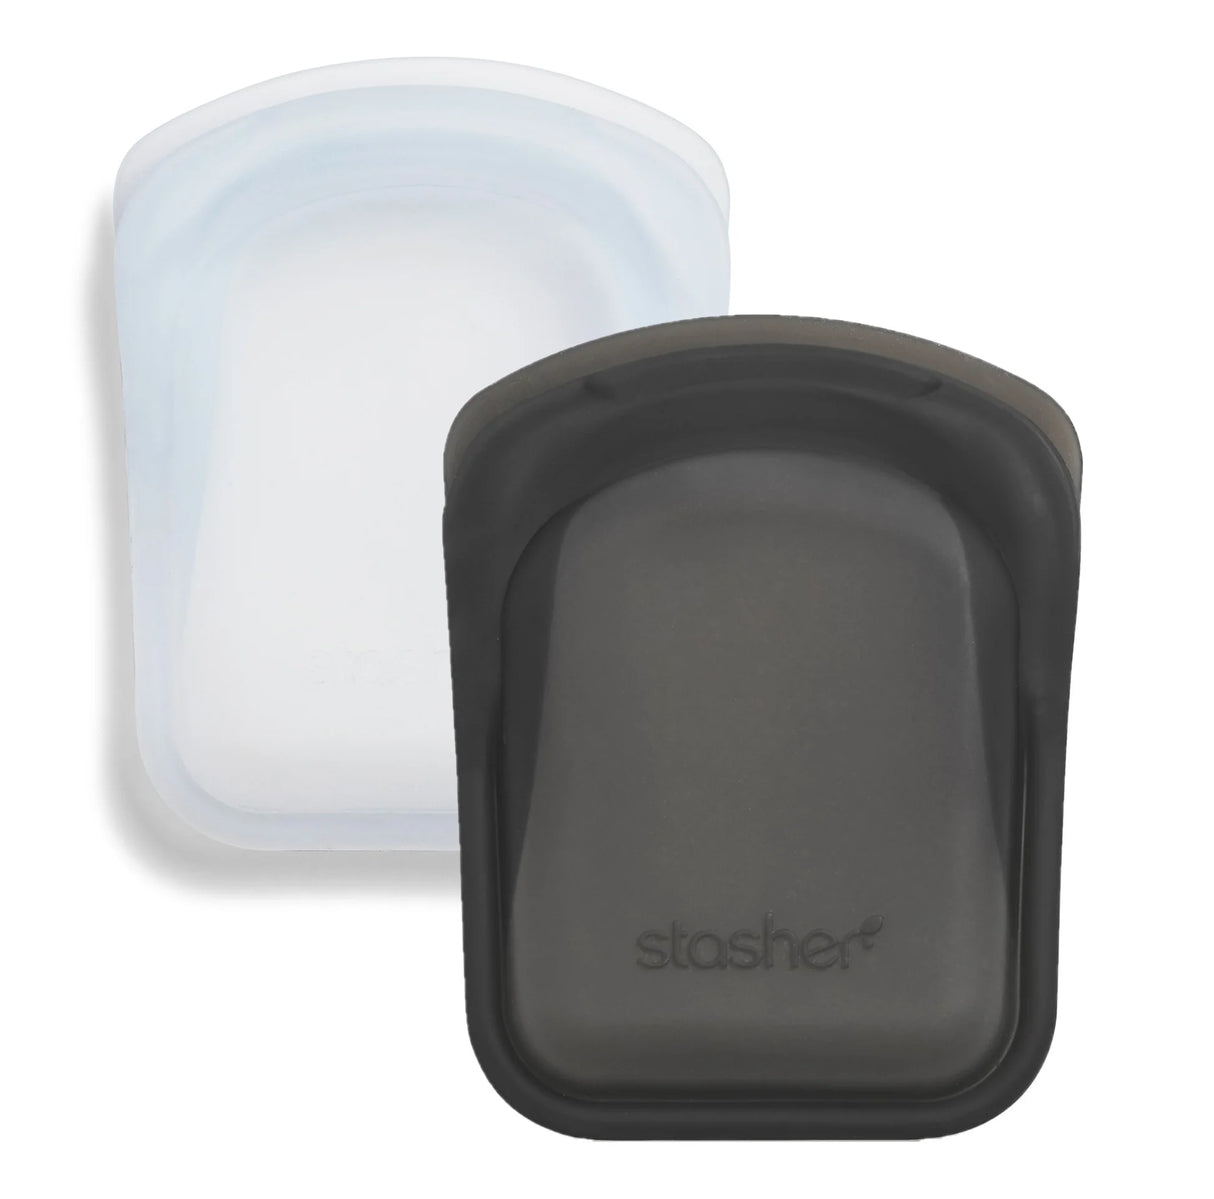 Stasher Pocket & Go Bag